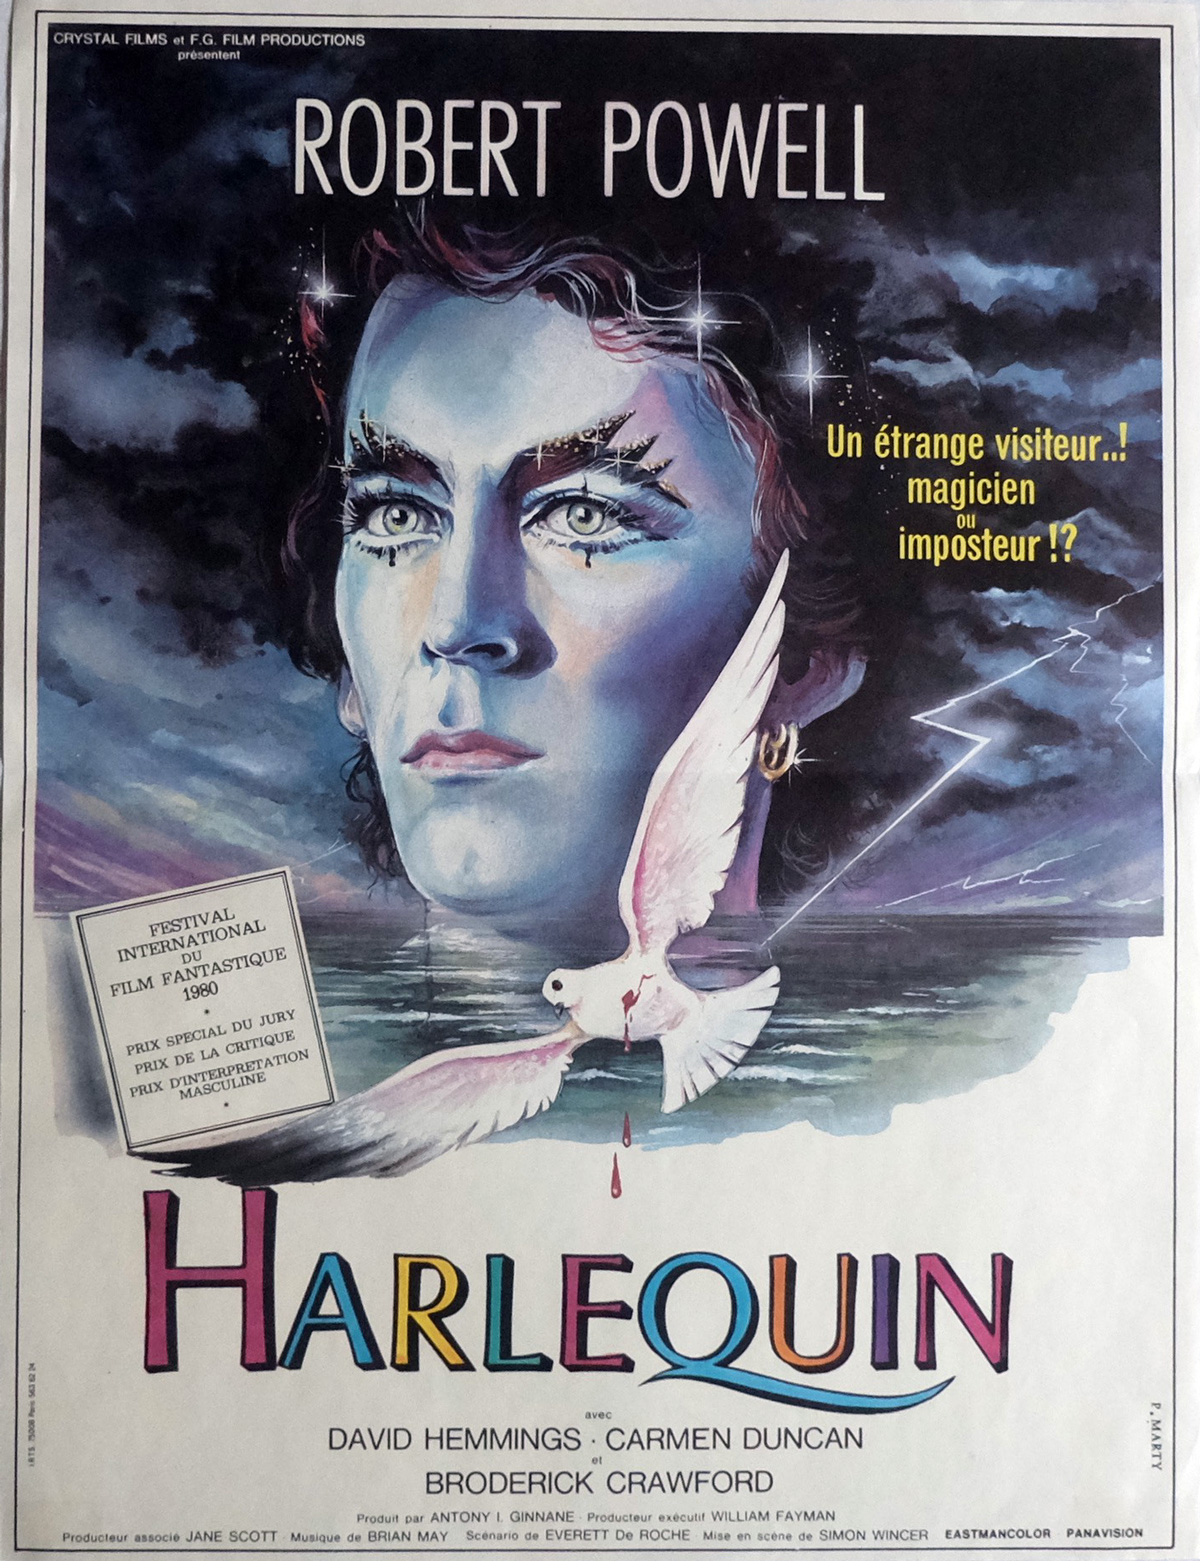 harlequin-affiche-de-film-40x60-cm-1980-robert-powell-simon-wincer.jpg